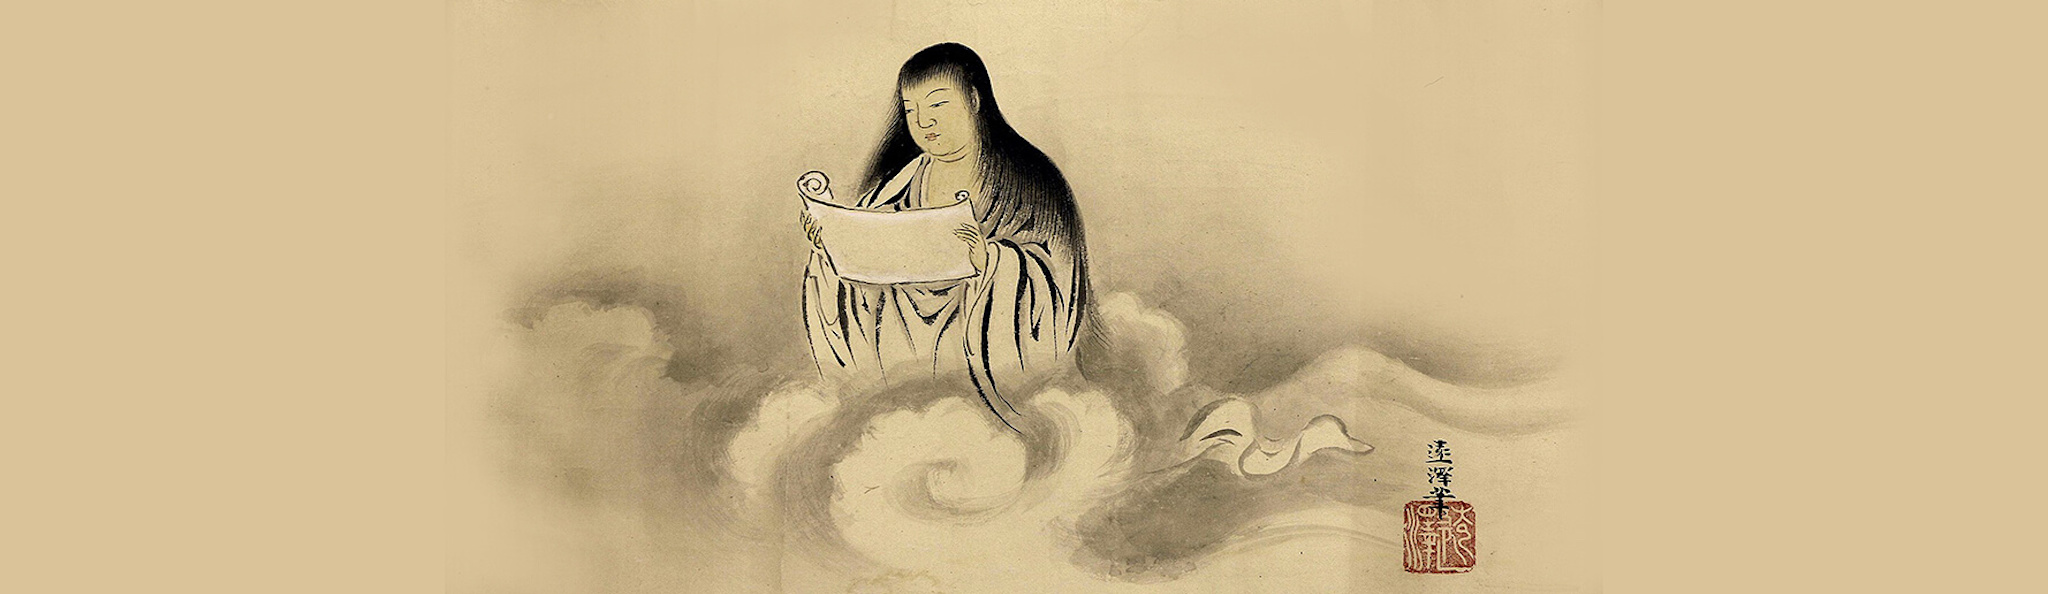 critical buddha studies